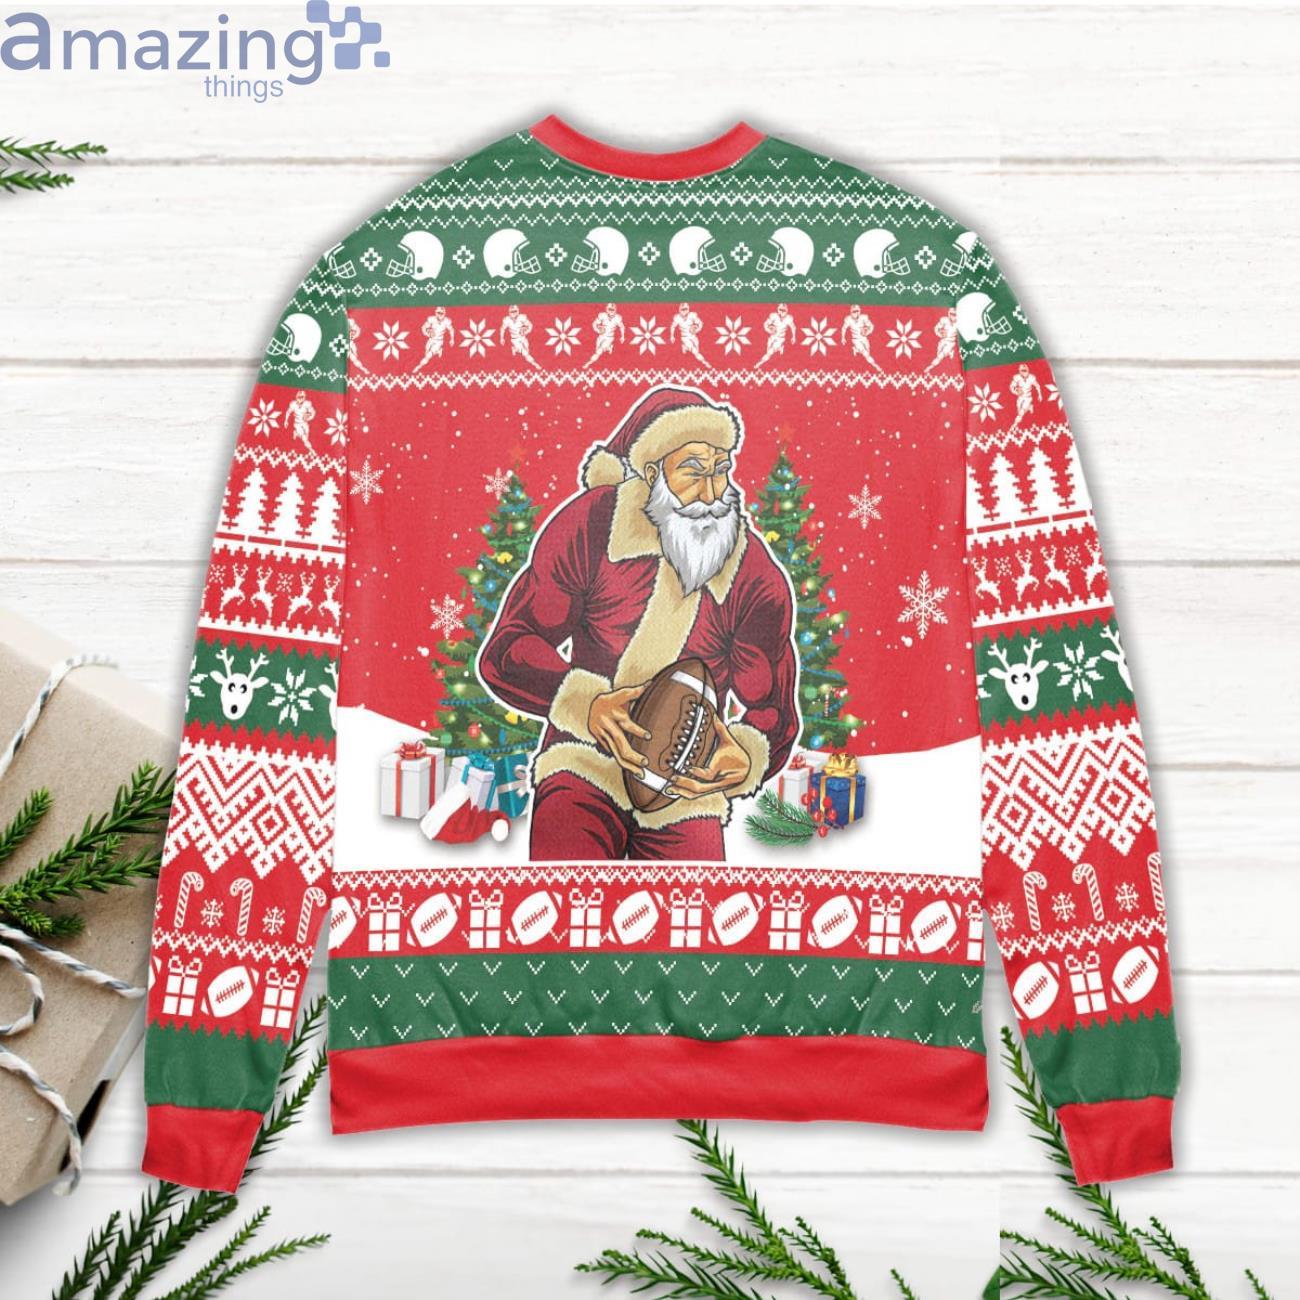 Winnipeg Jets Santa Hat Snowflake Ugly Christmas Sweater For Men And Women  Gift - Banantees